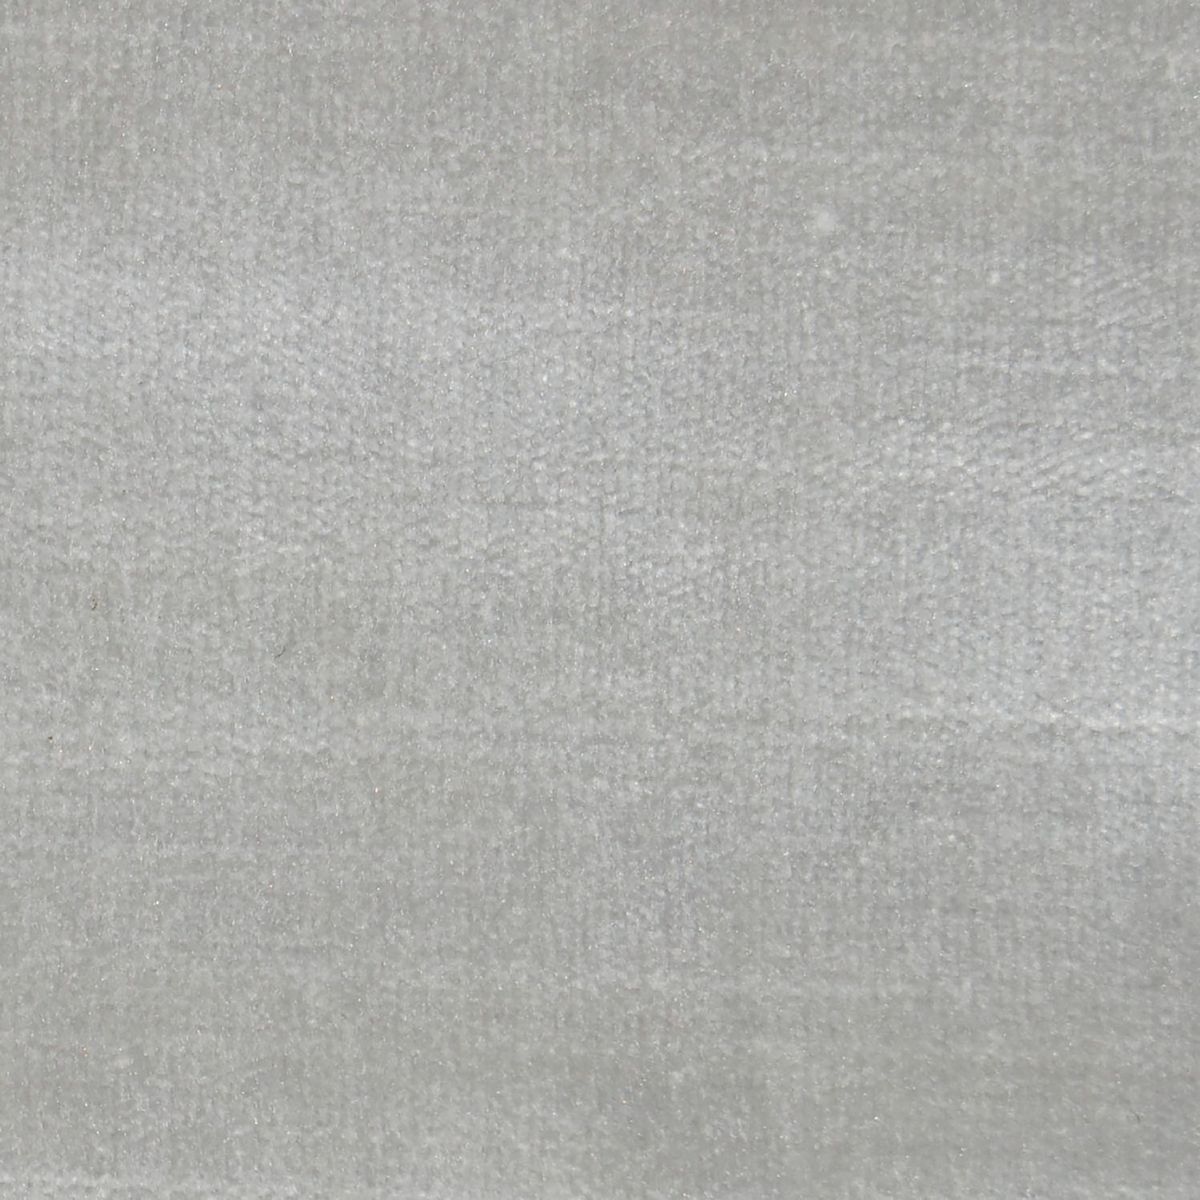 Chiaso Silver Velvet Fabric by Voyage Maison